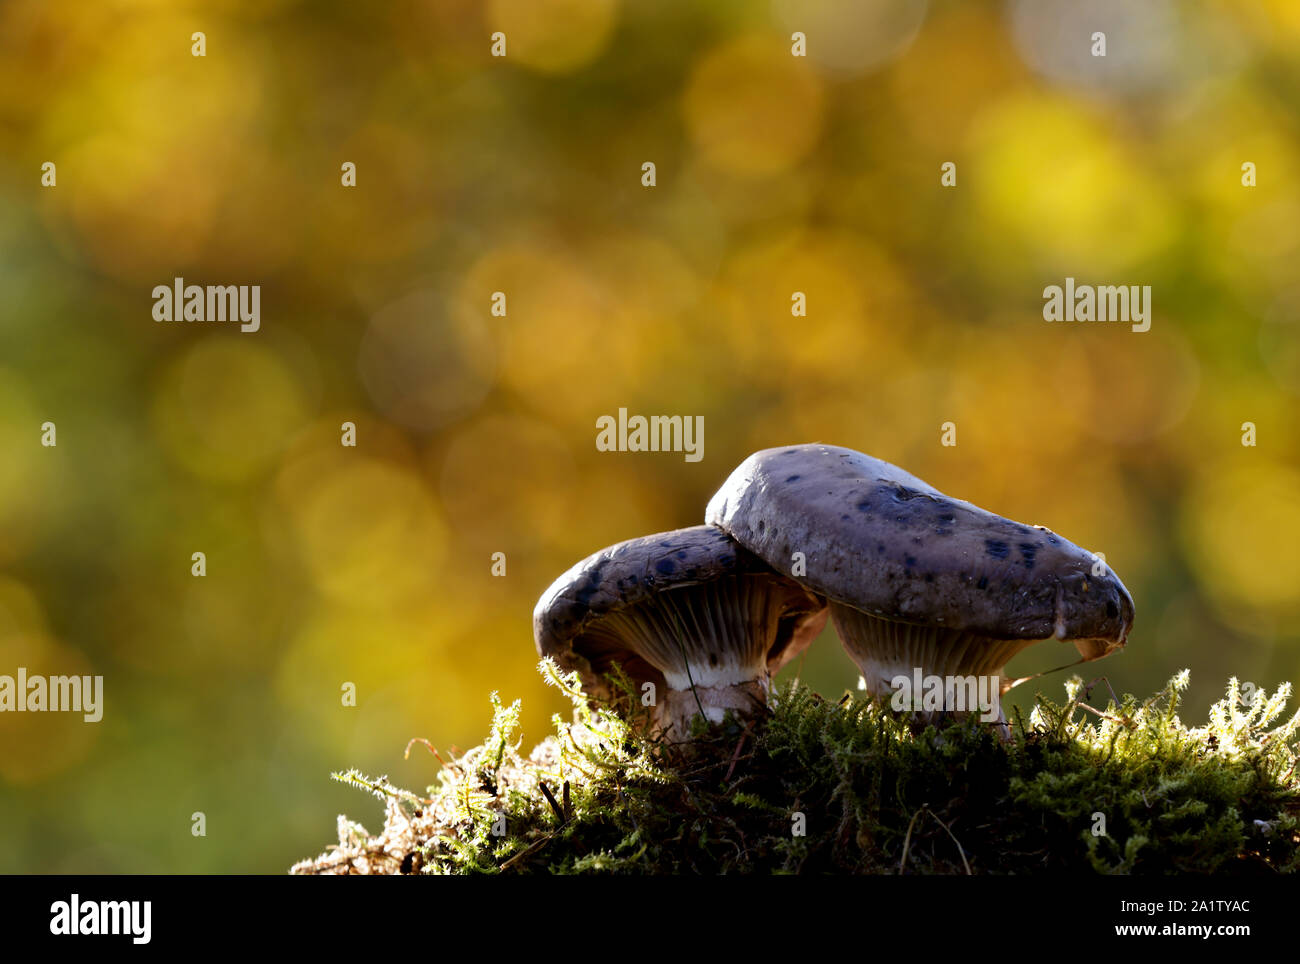 Gomphidius glutinosus, commonly known as the slimy spike-cap, wild edible mushroom in beautiful light Stock Photo